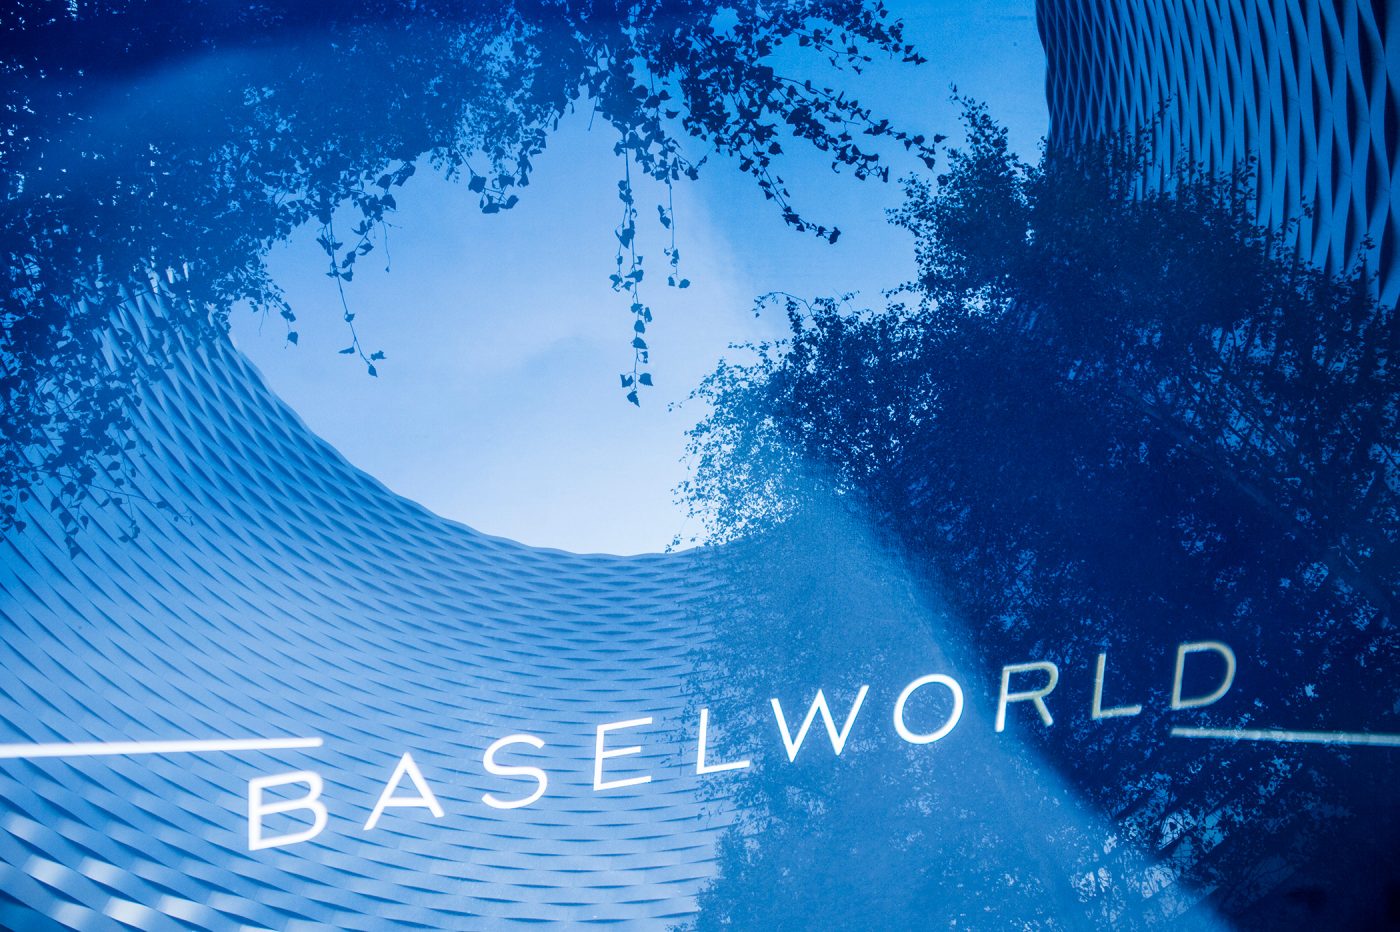 BaselWorld 2018